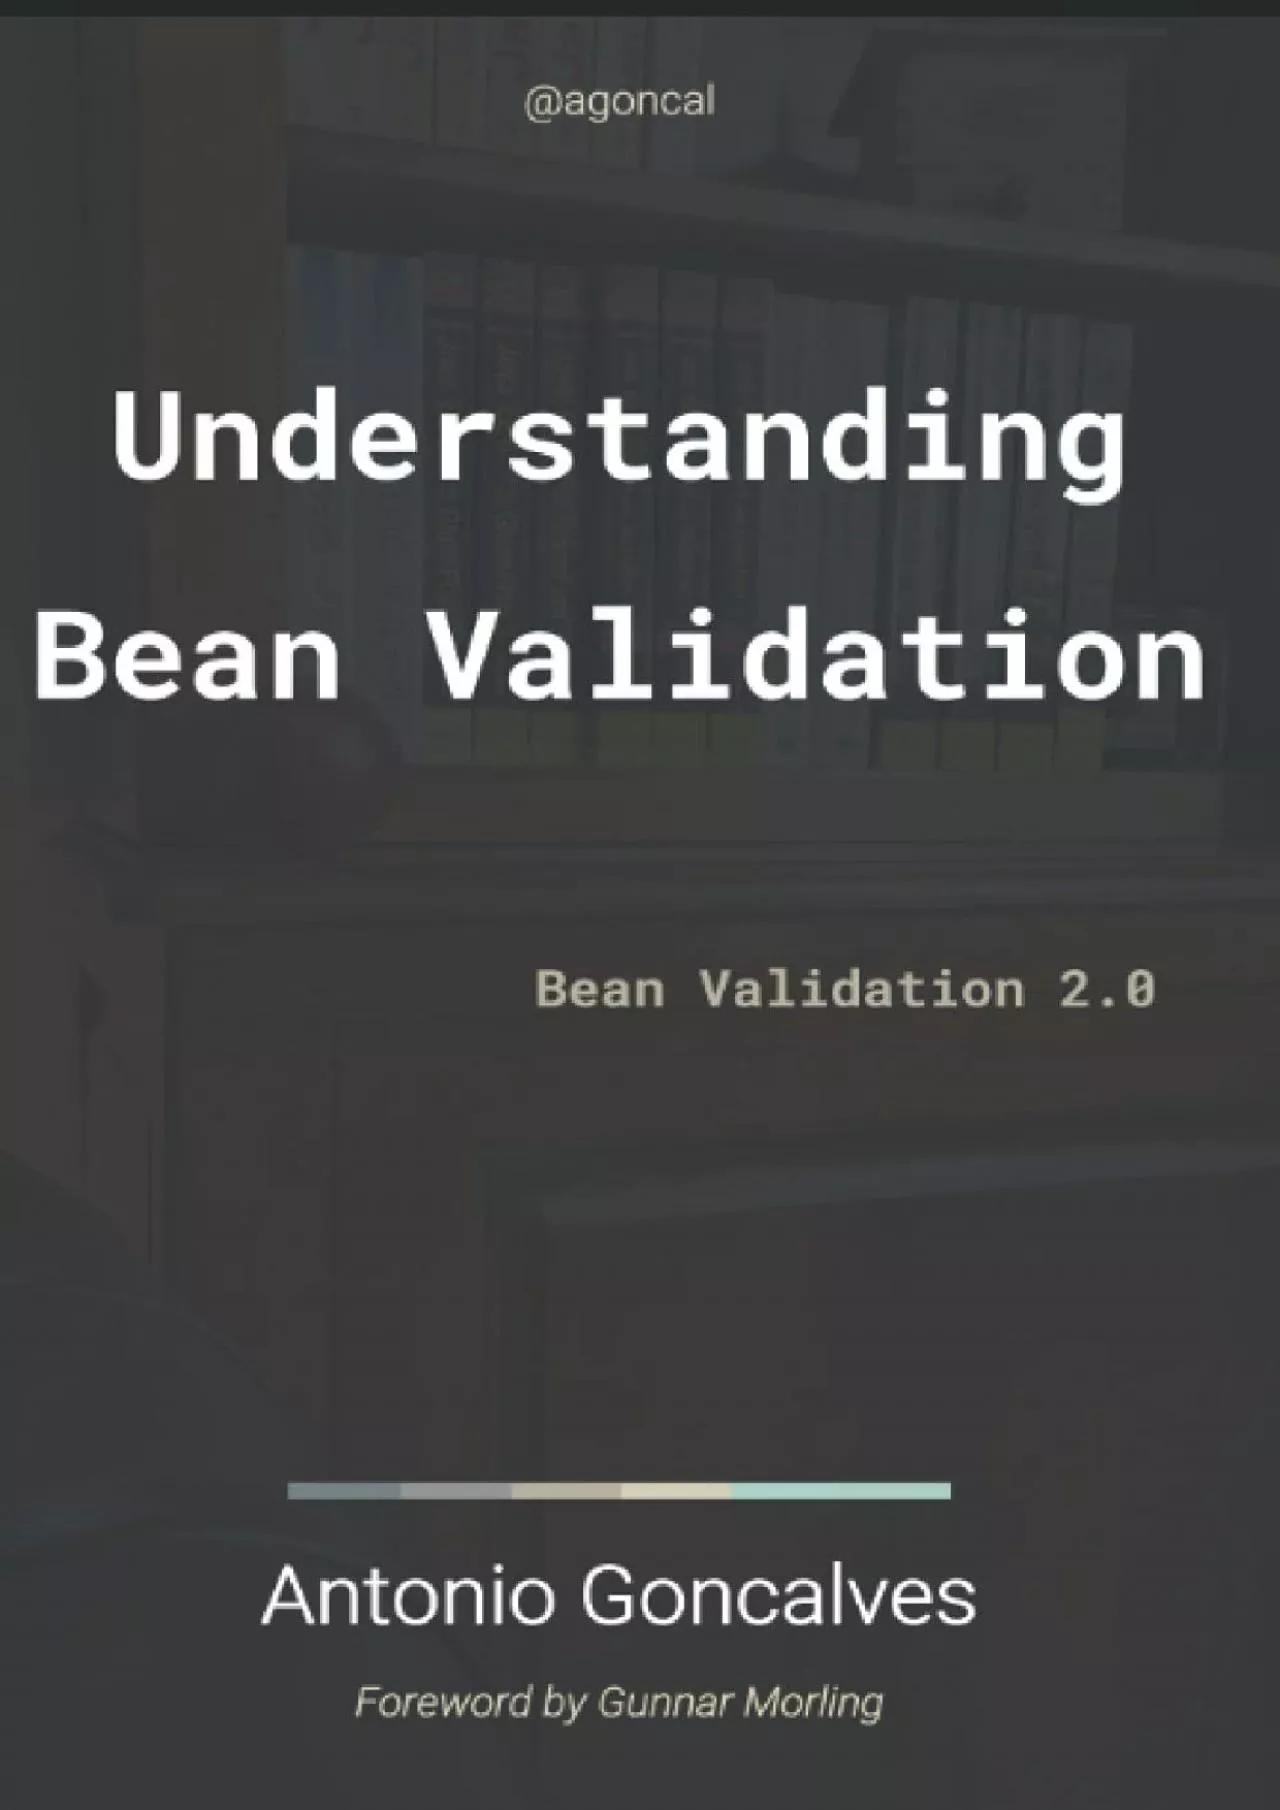 [PDF]-Understanding Bean Validation 2.0: Bean Validation (agoncal fascicles)